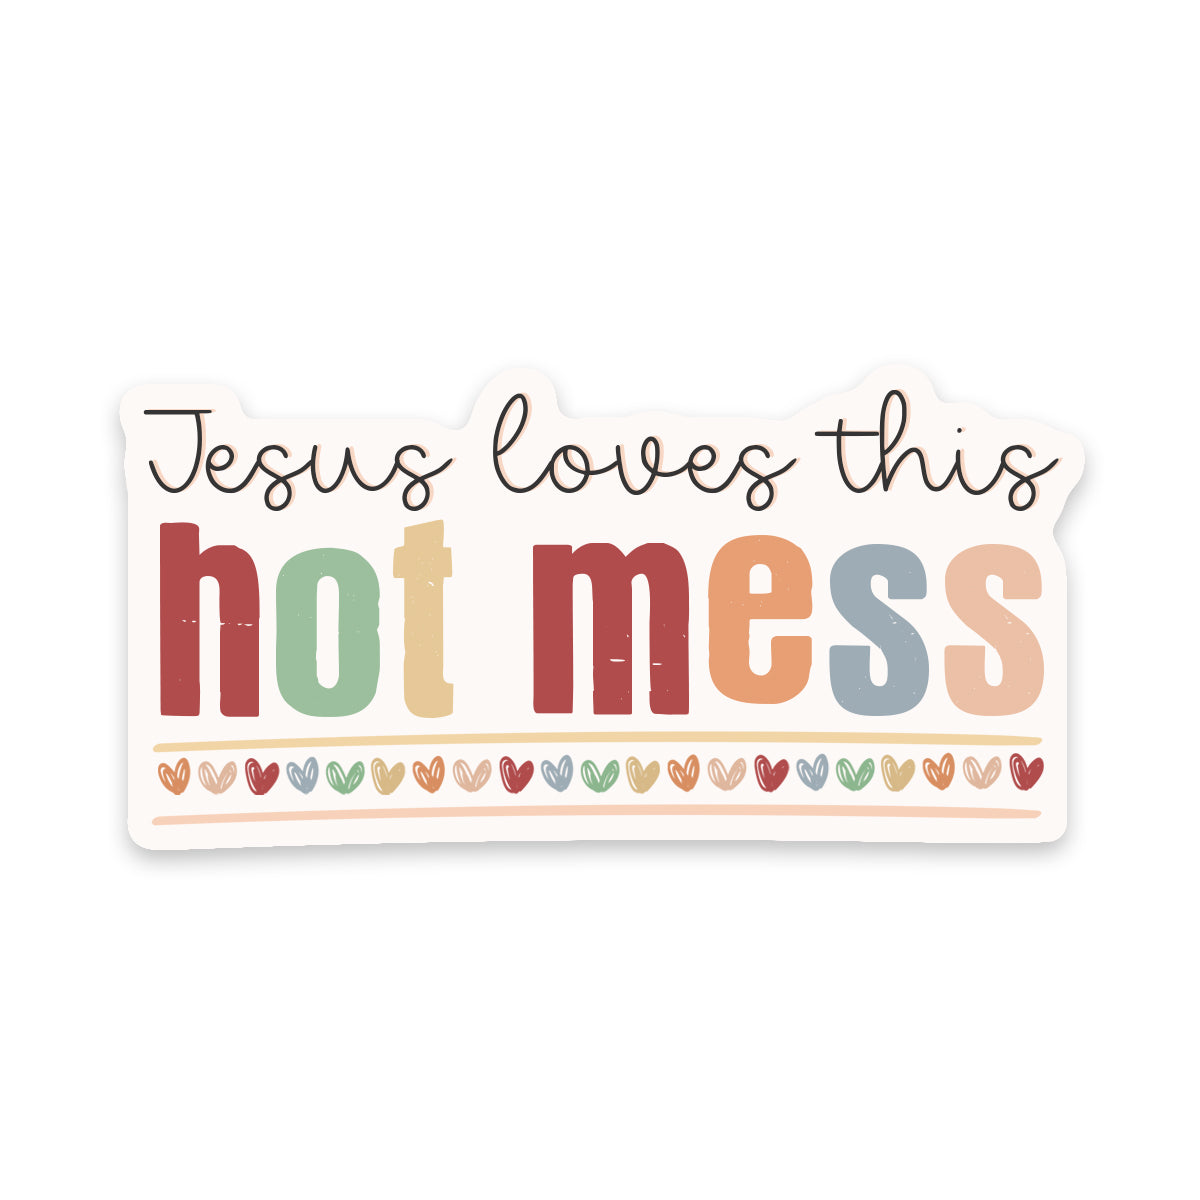 Jesus Loves This Hot Mess Sticker